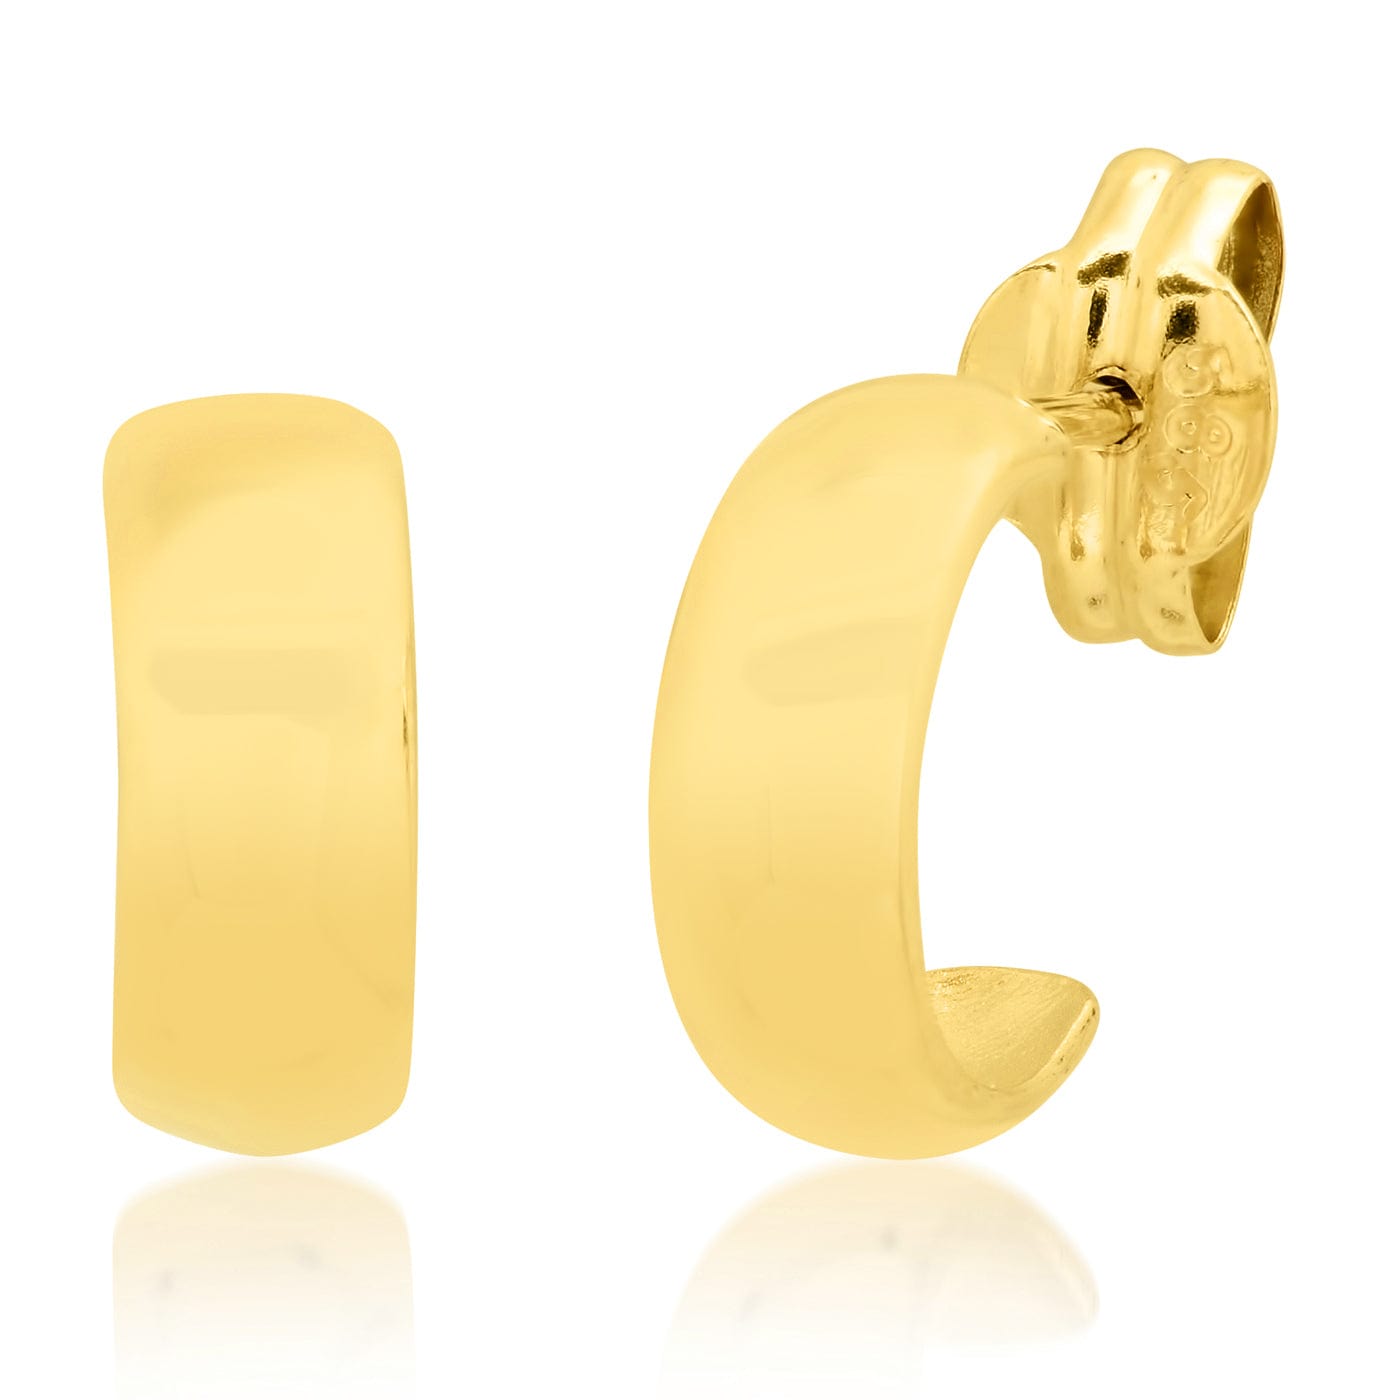 TAI JEWELRY Earrings 14k Gold 14k Thick Huggies